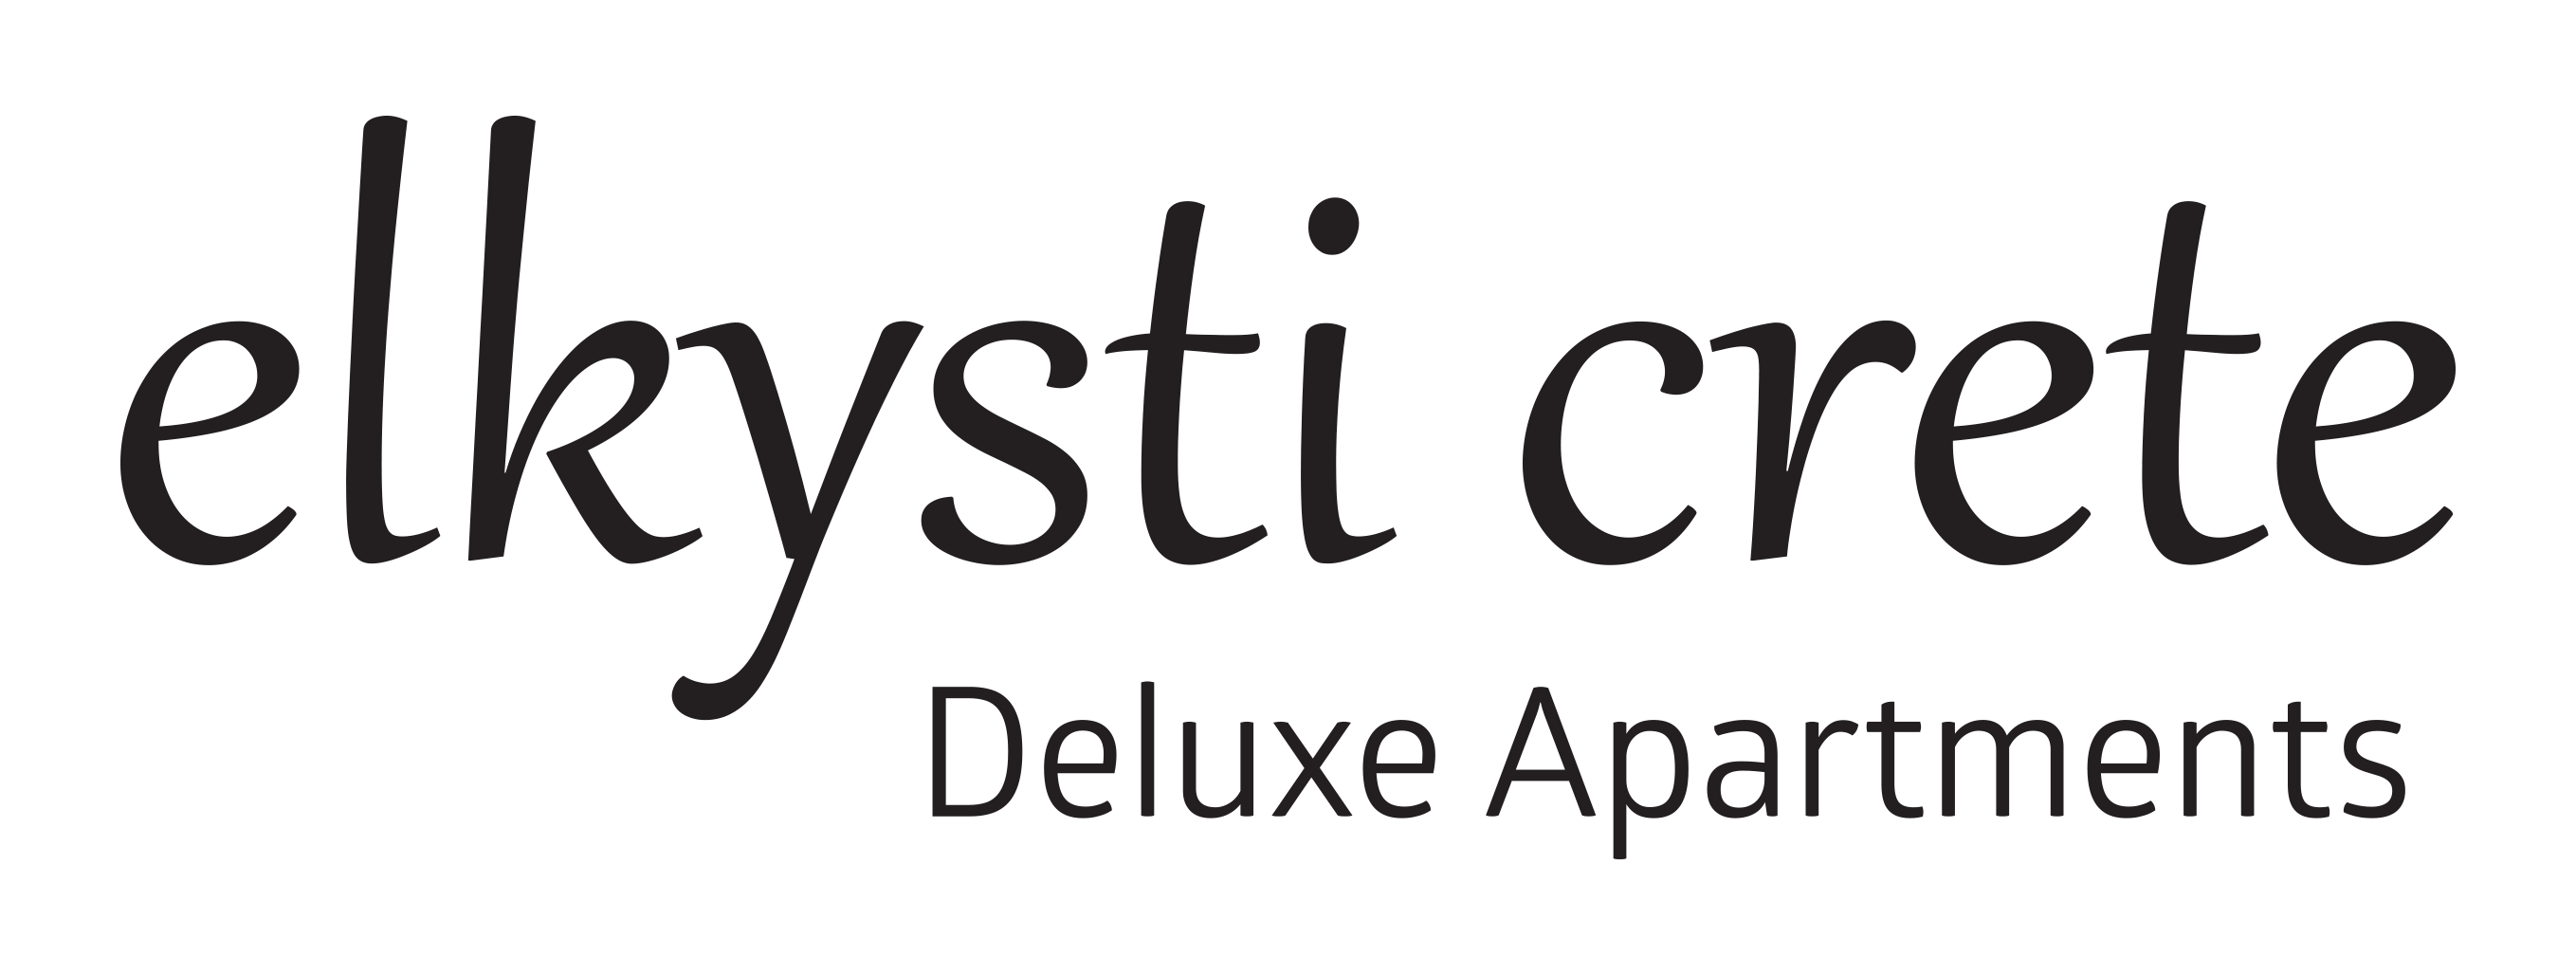 Elkysti Luxury Vacation Apartments logo